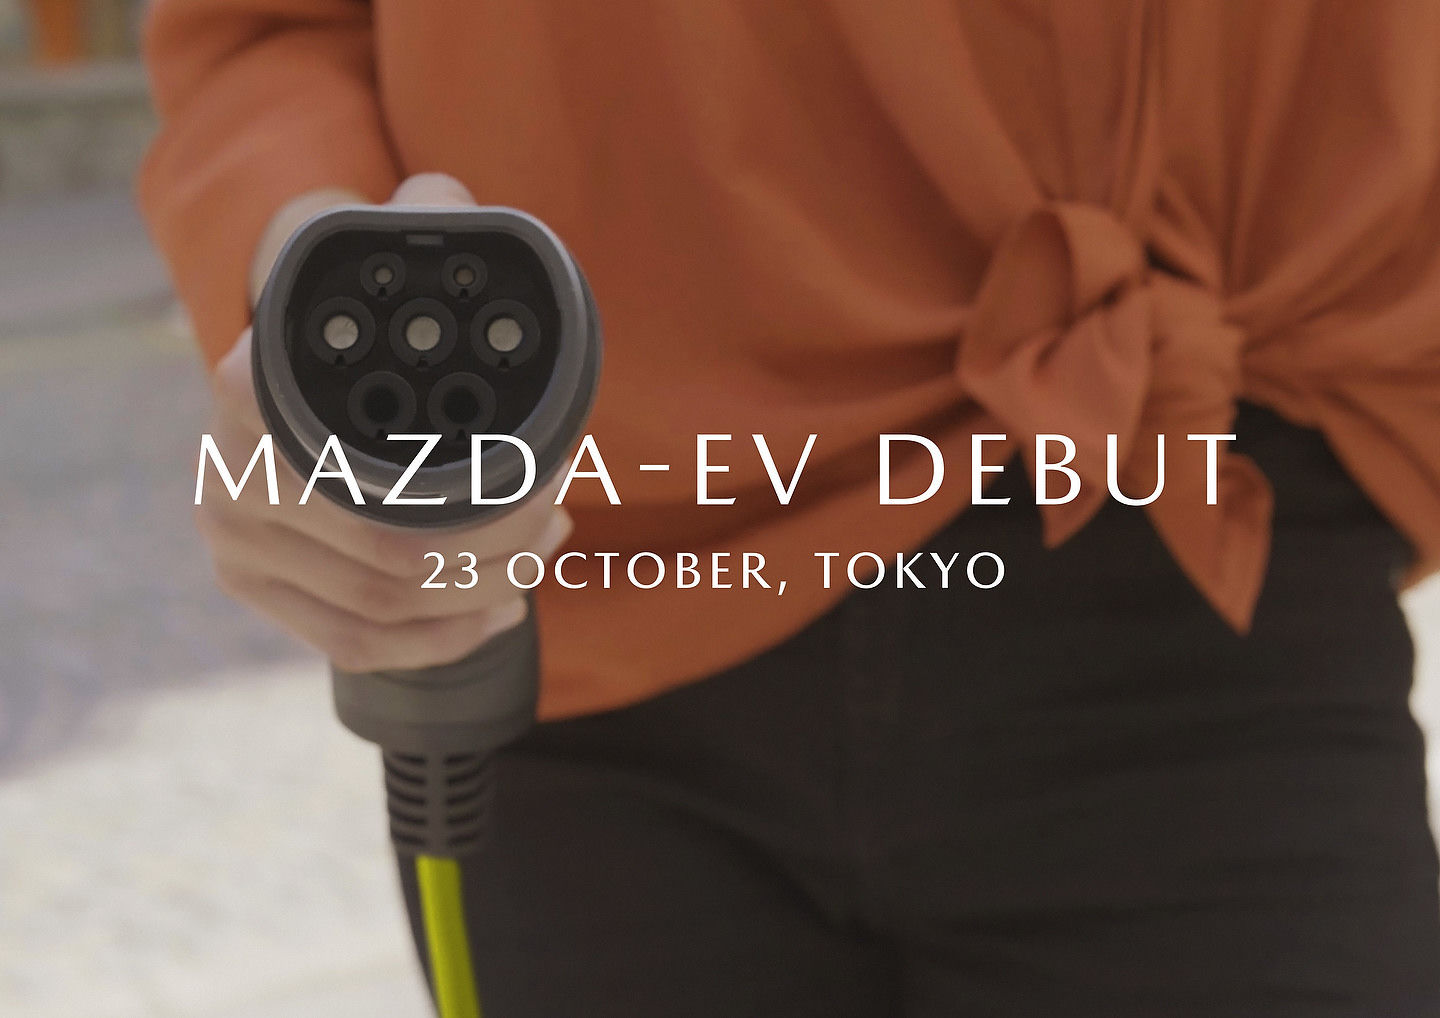 Mazda preparing to unveil new electric model in Tokyo